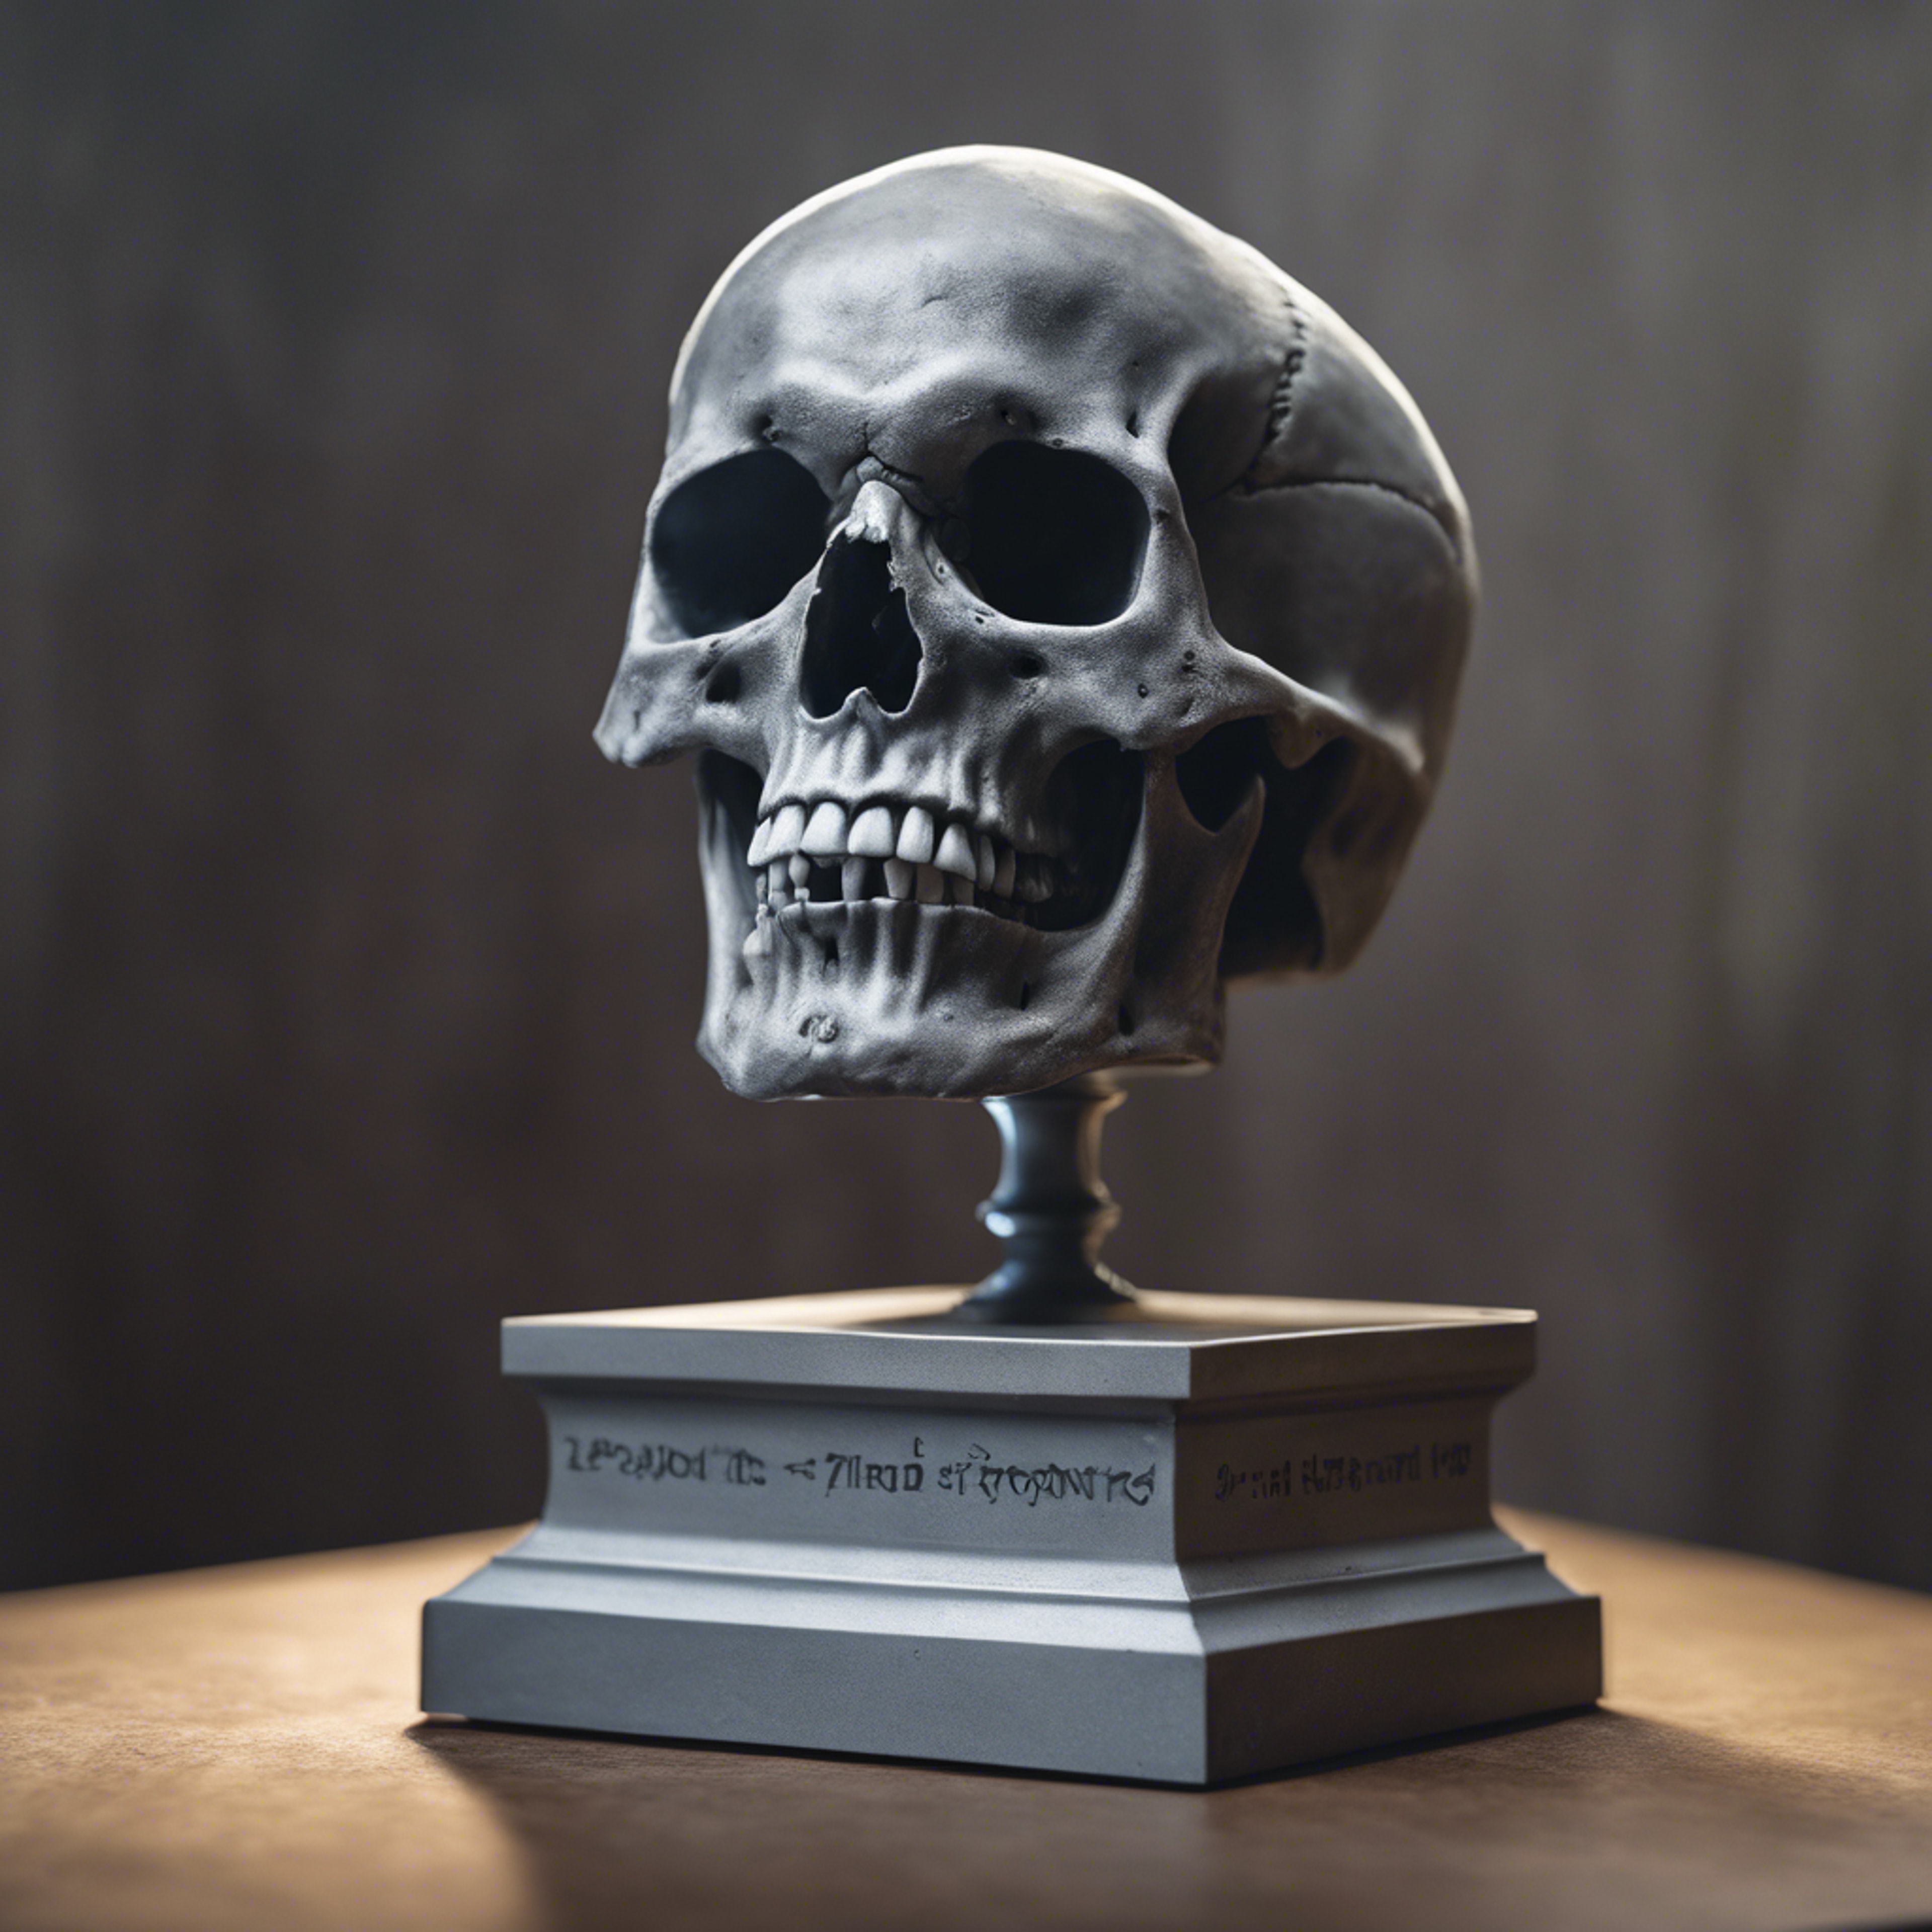 A spot-lit gray skull on a pedestal, starring in a classic horror movie scene. Tapeta[96b08be545414606ae5a]